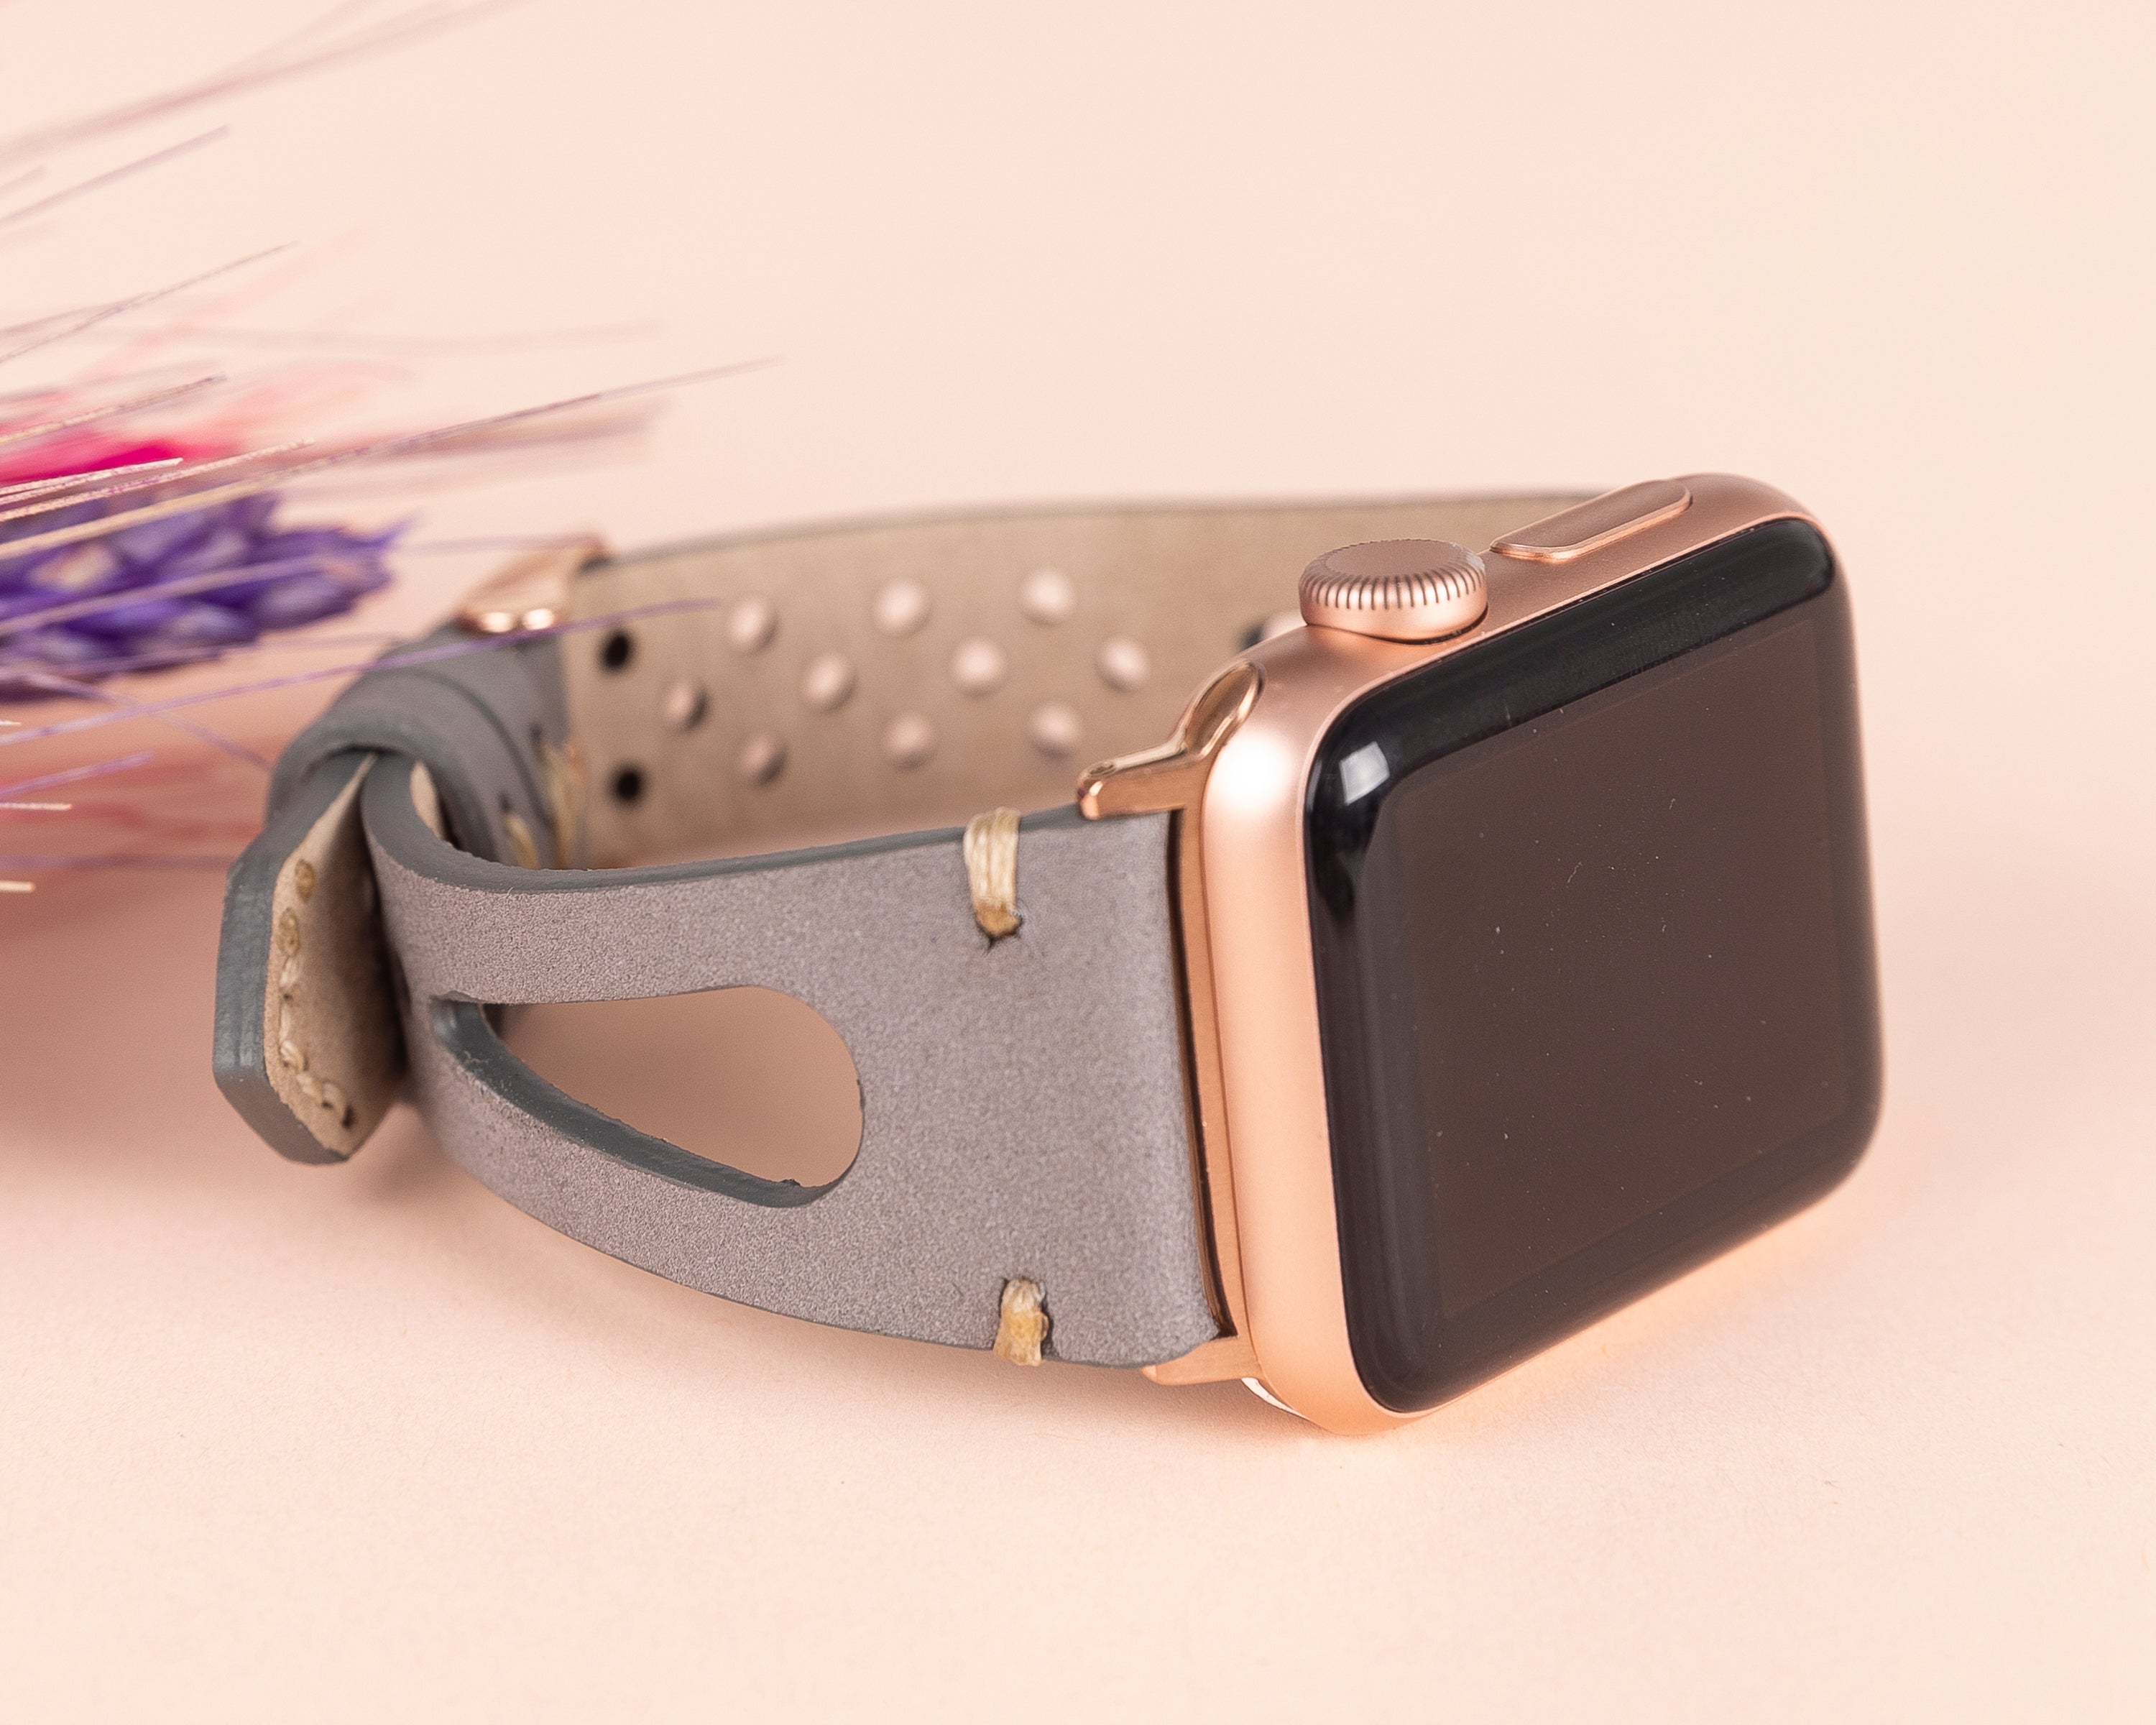 DelfiCase Quinn Watch Band for Apple Watch & Fitbit Versa/Sense (Brown) 5